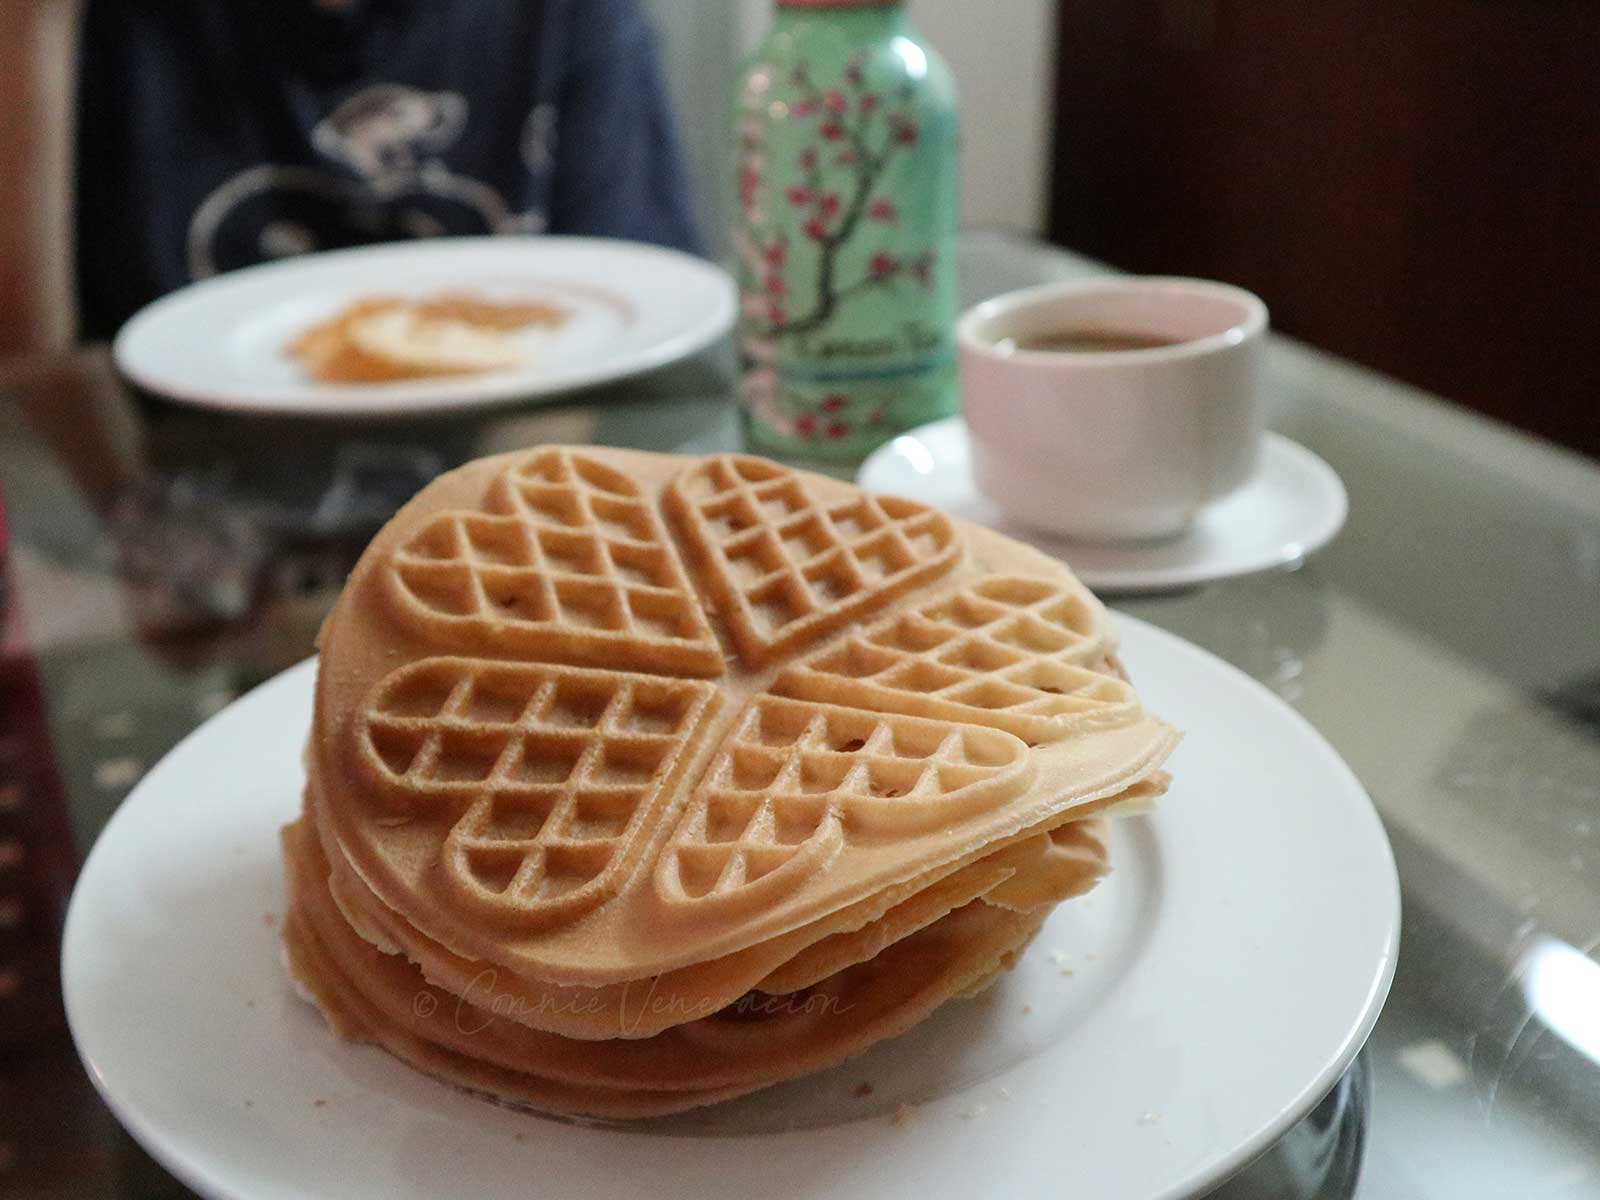 Saigon waffles